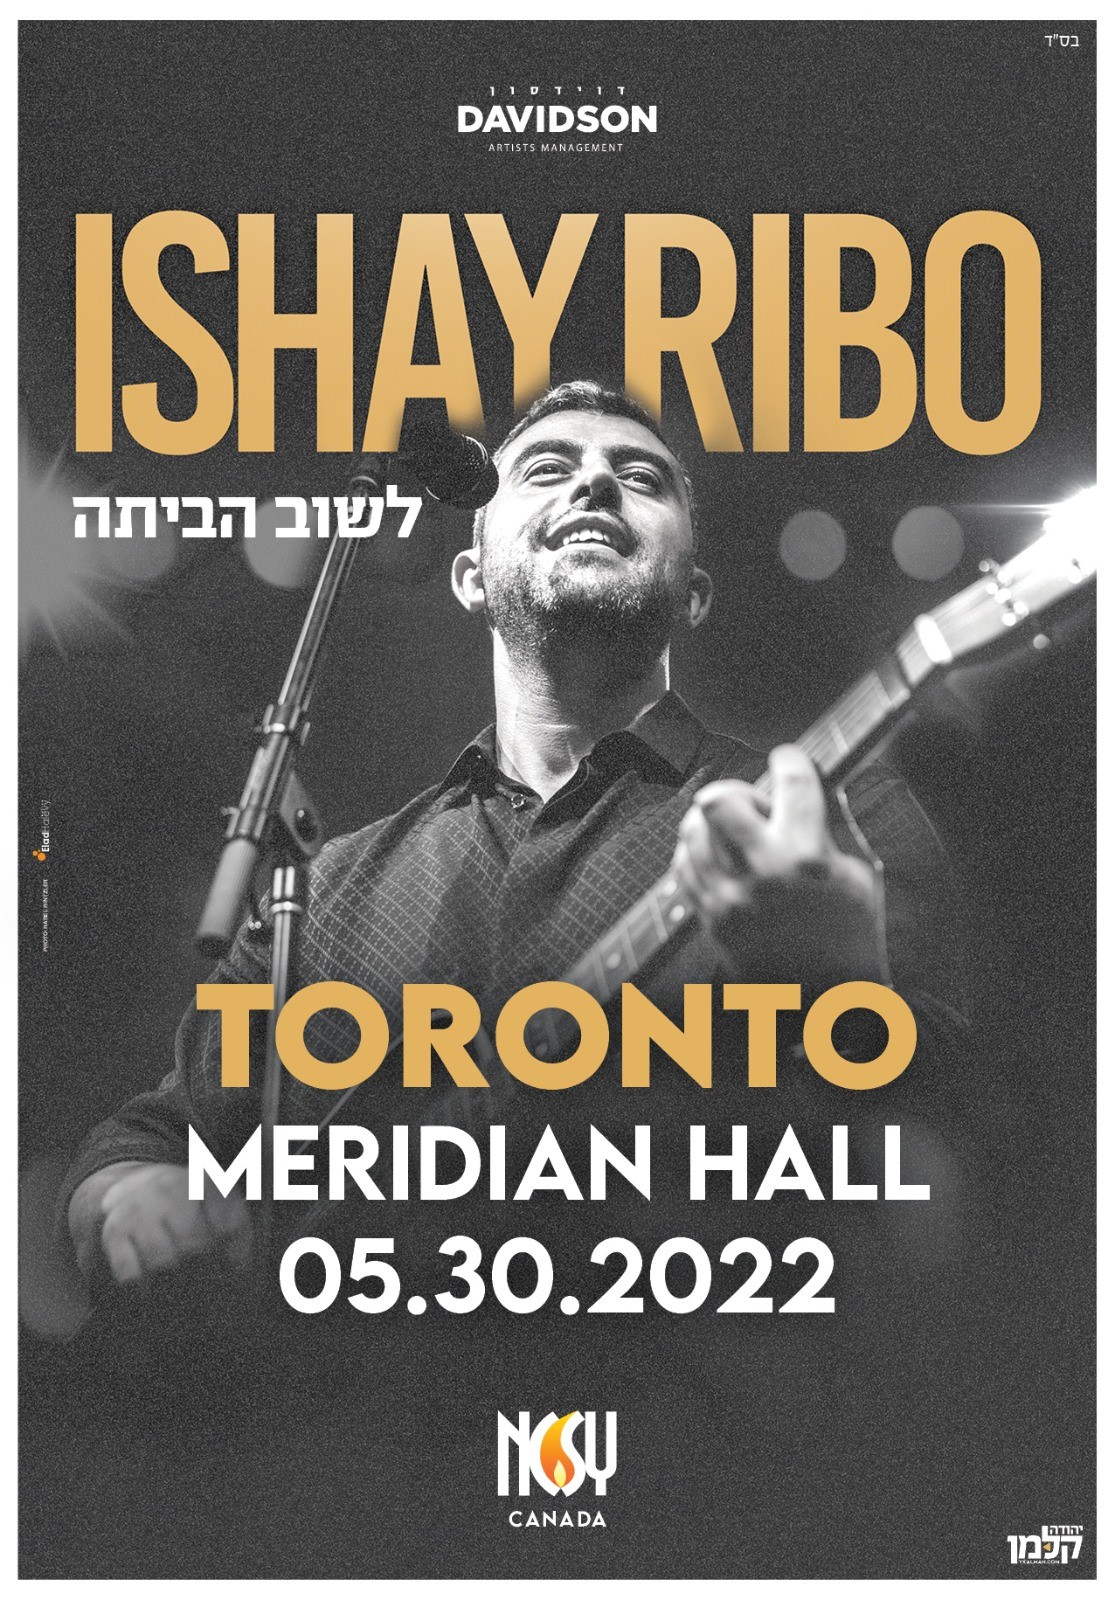 Ishay Ribo - NCSY Canada  on may. 30, 19:30@Meridian Hall - Pick a seat, Buy tickets and Get information on Ishay Ribo Concert riboconcert